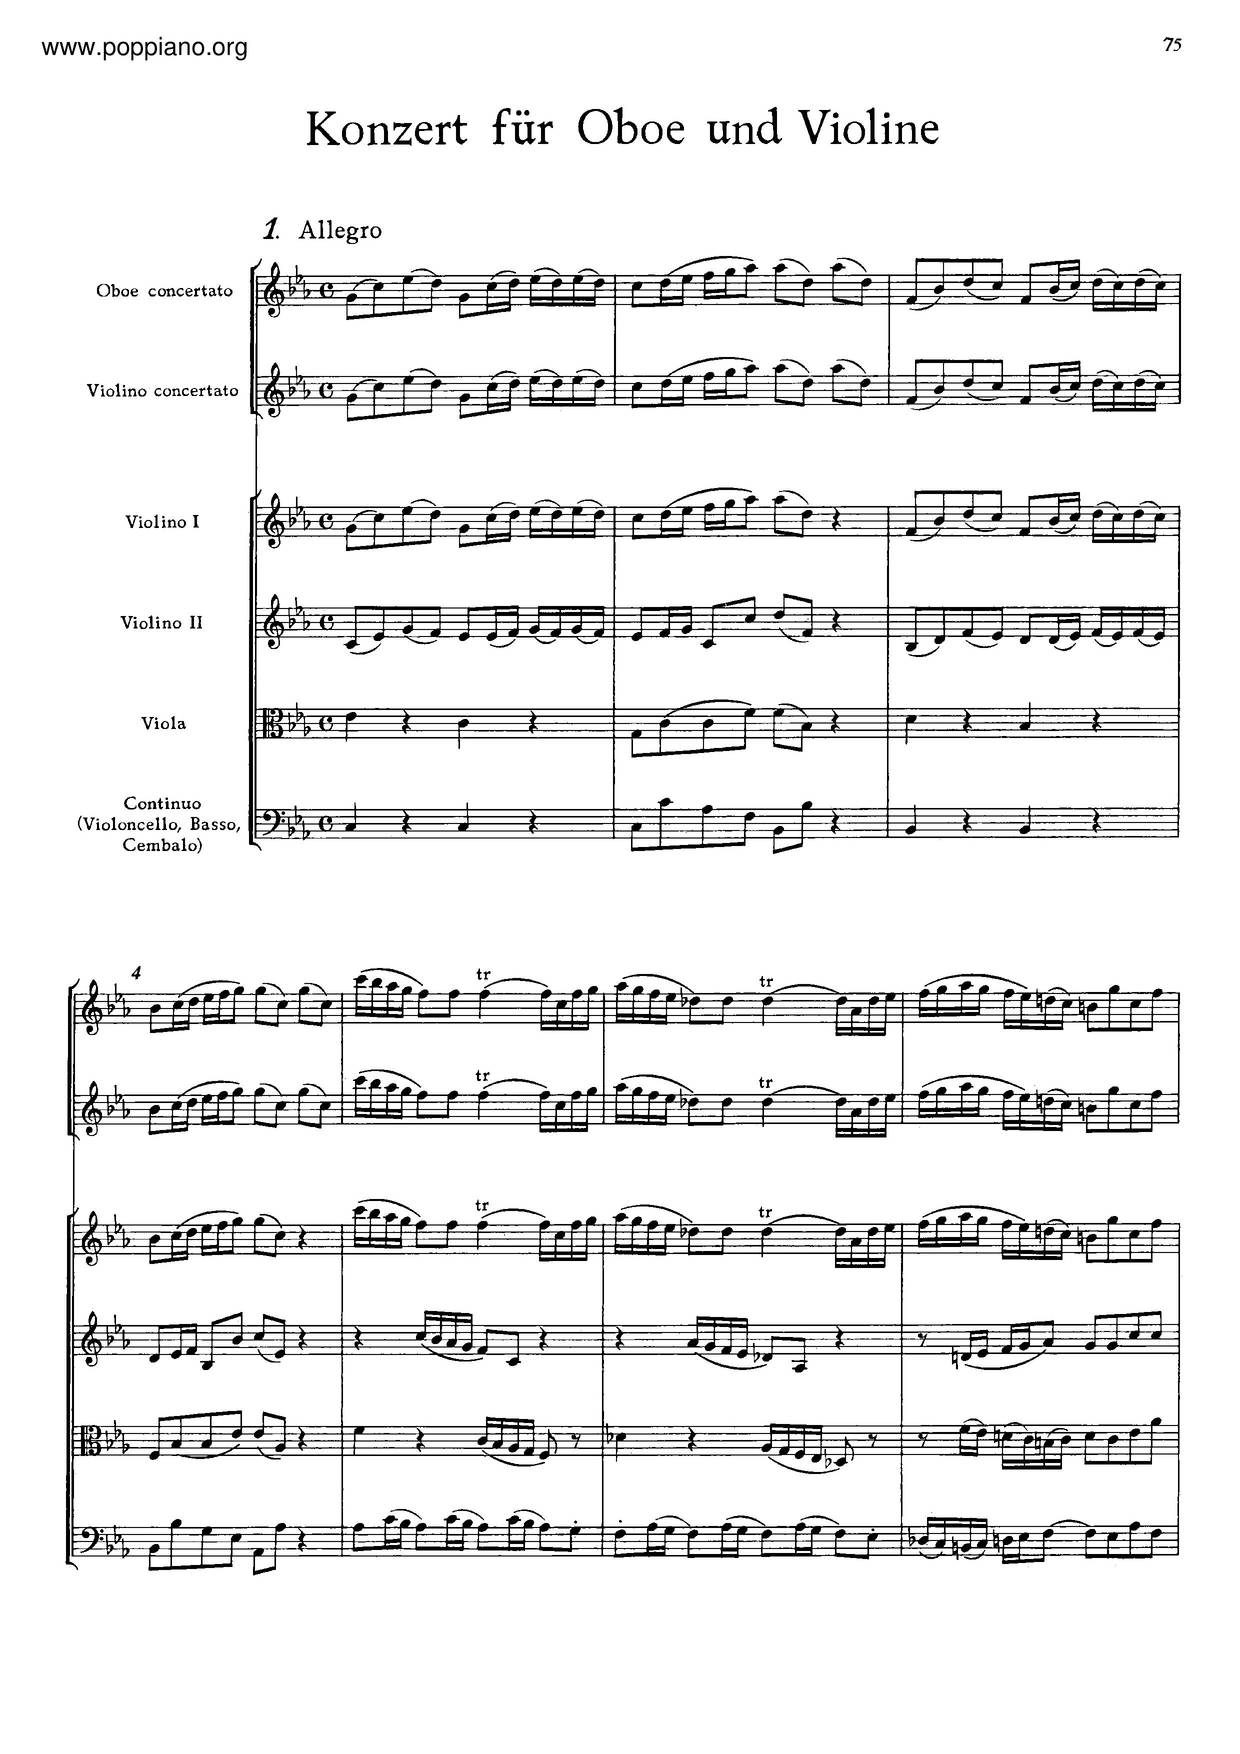 Concerto For Violin And Oboe In C Minor, BWV 1060R琴譜